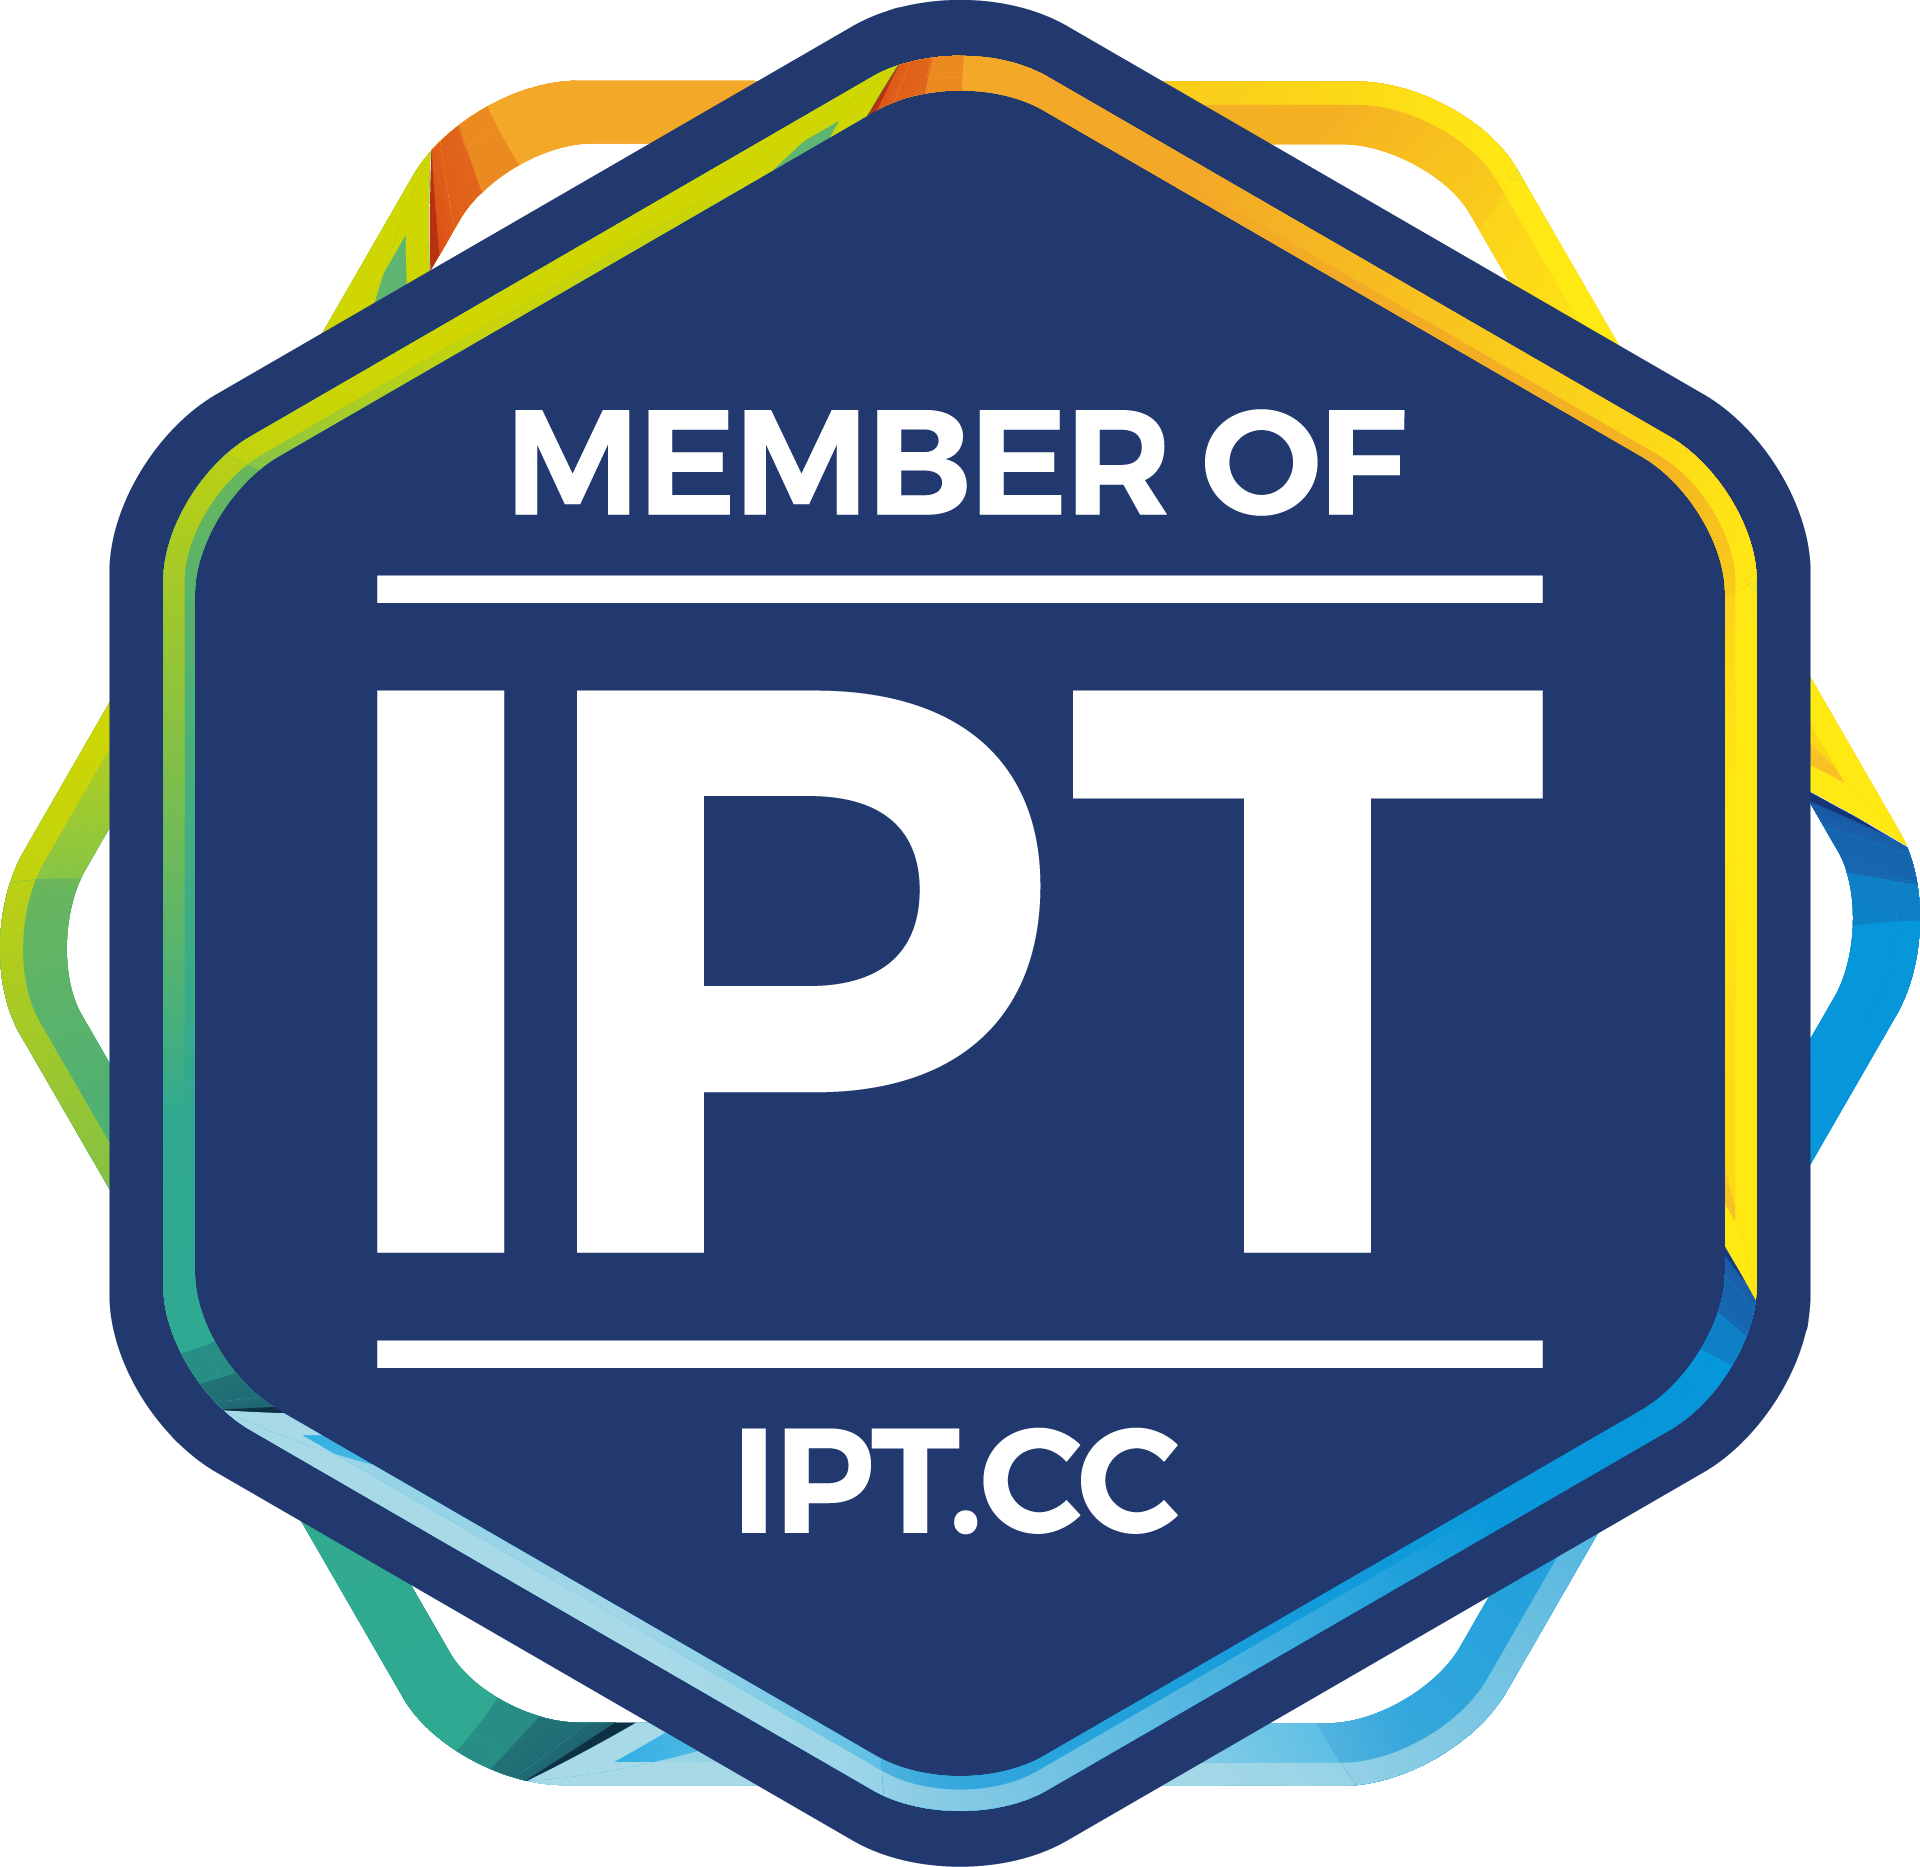 Member of IPT.CC